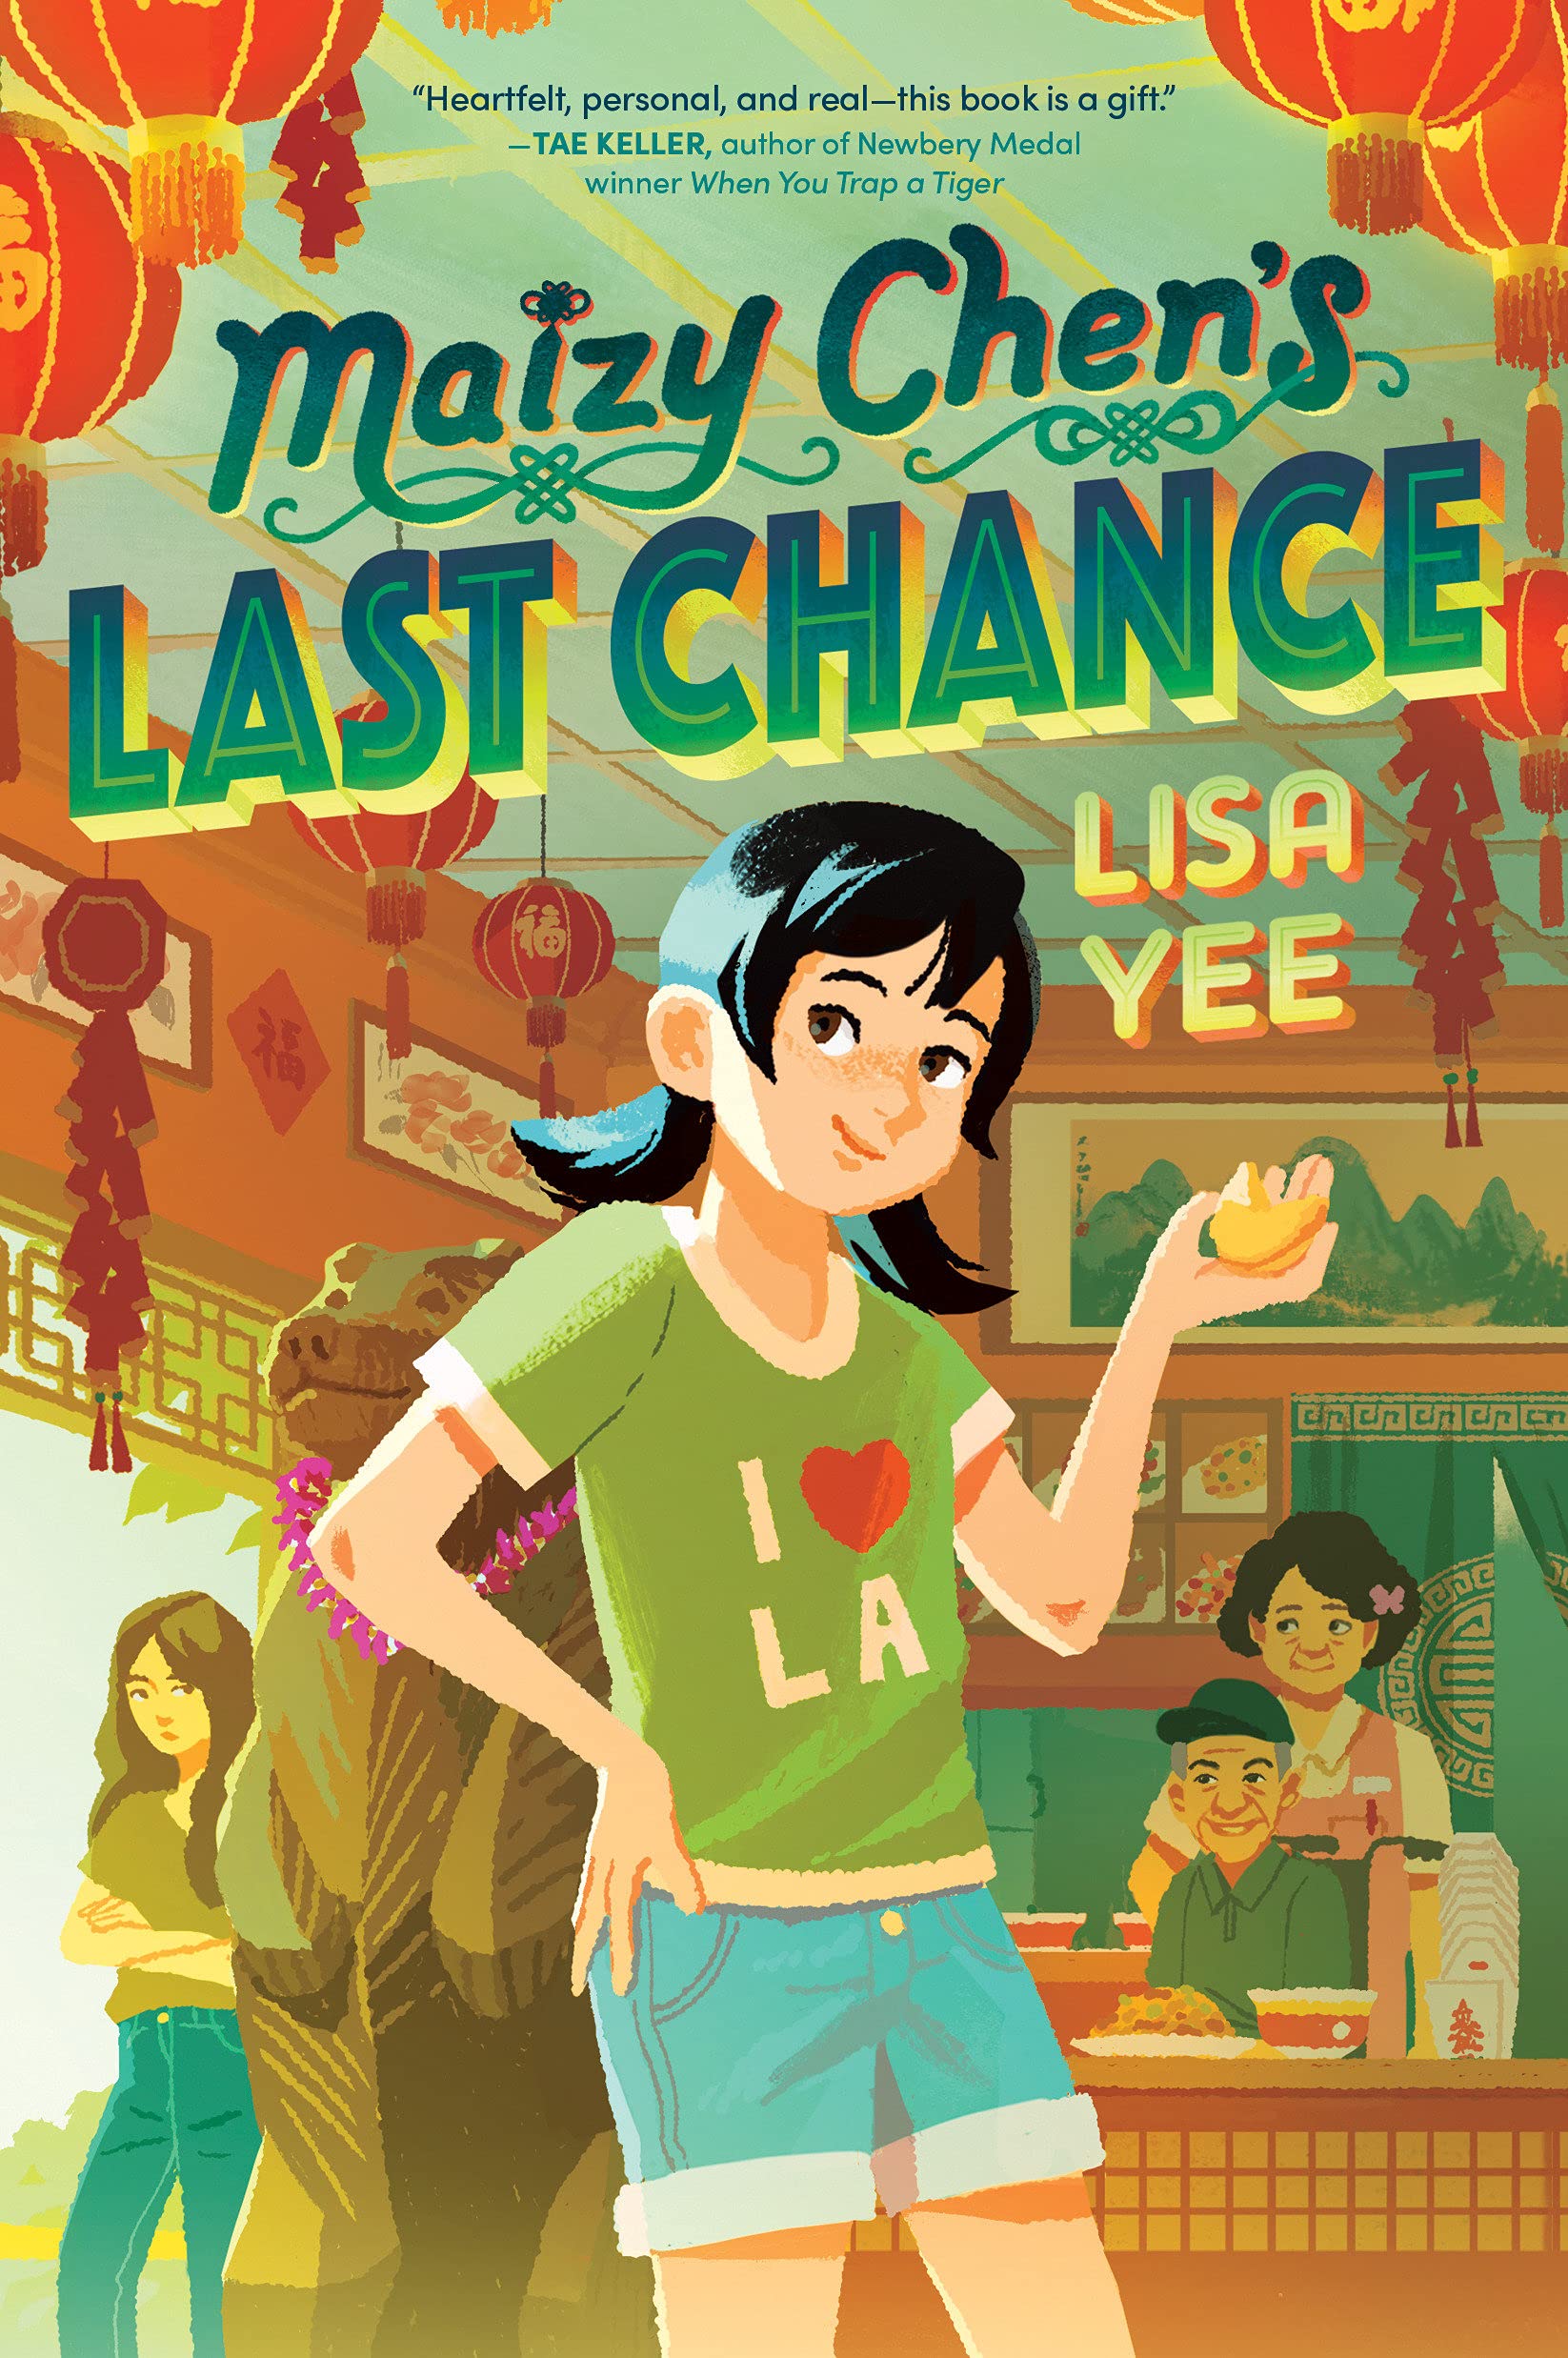 Maisy Chen's Last Chance by Lisa Yee